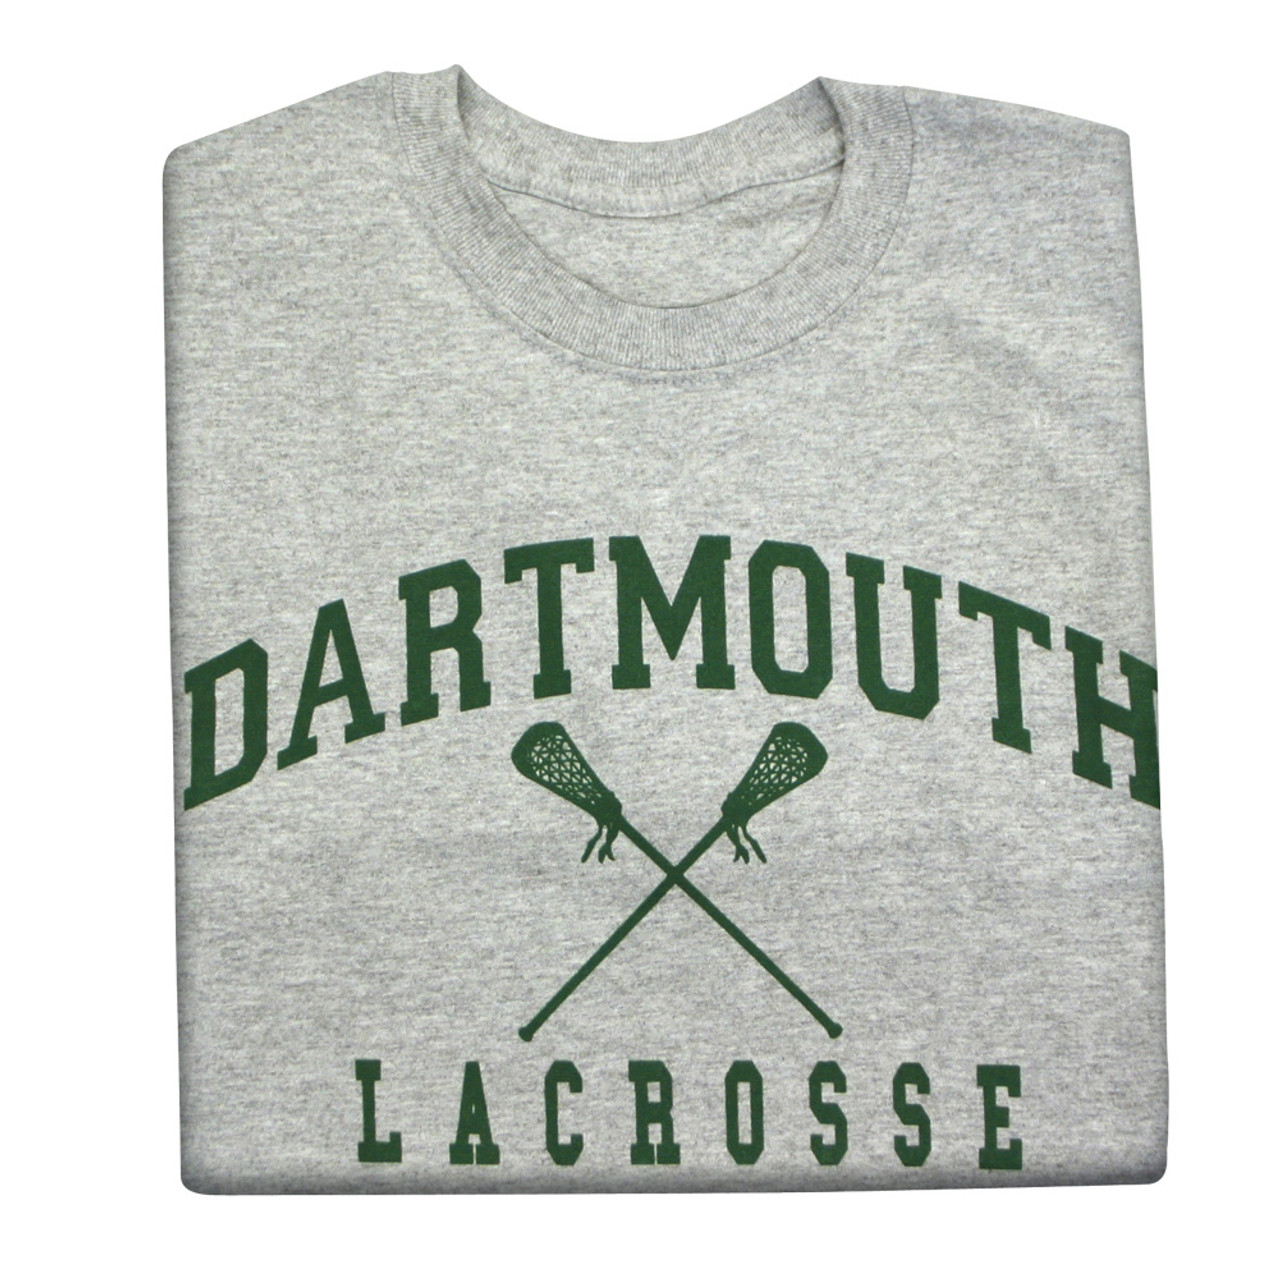 youth lacrosse sweatshirts